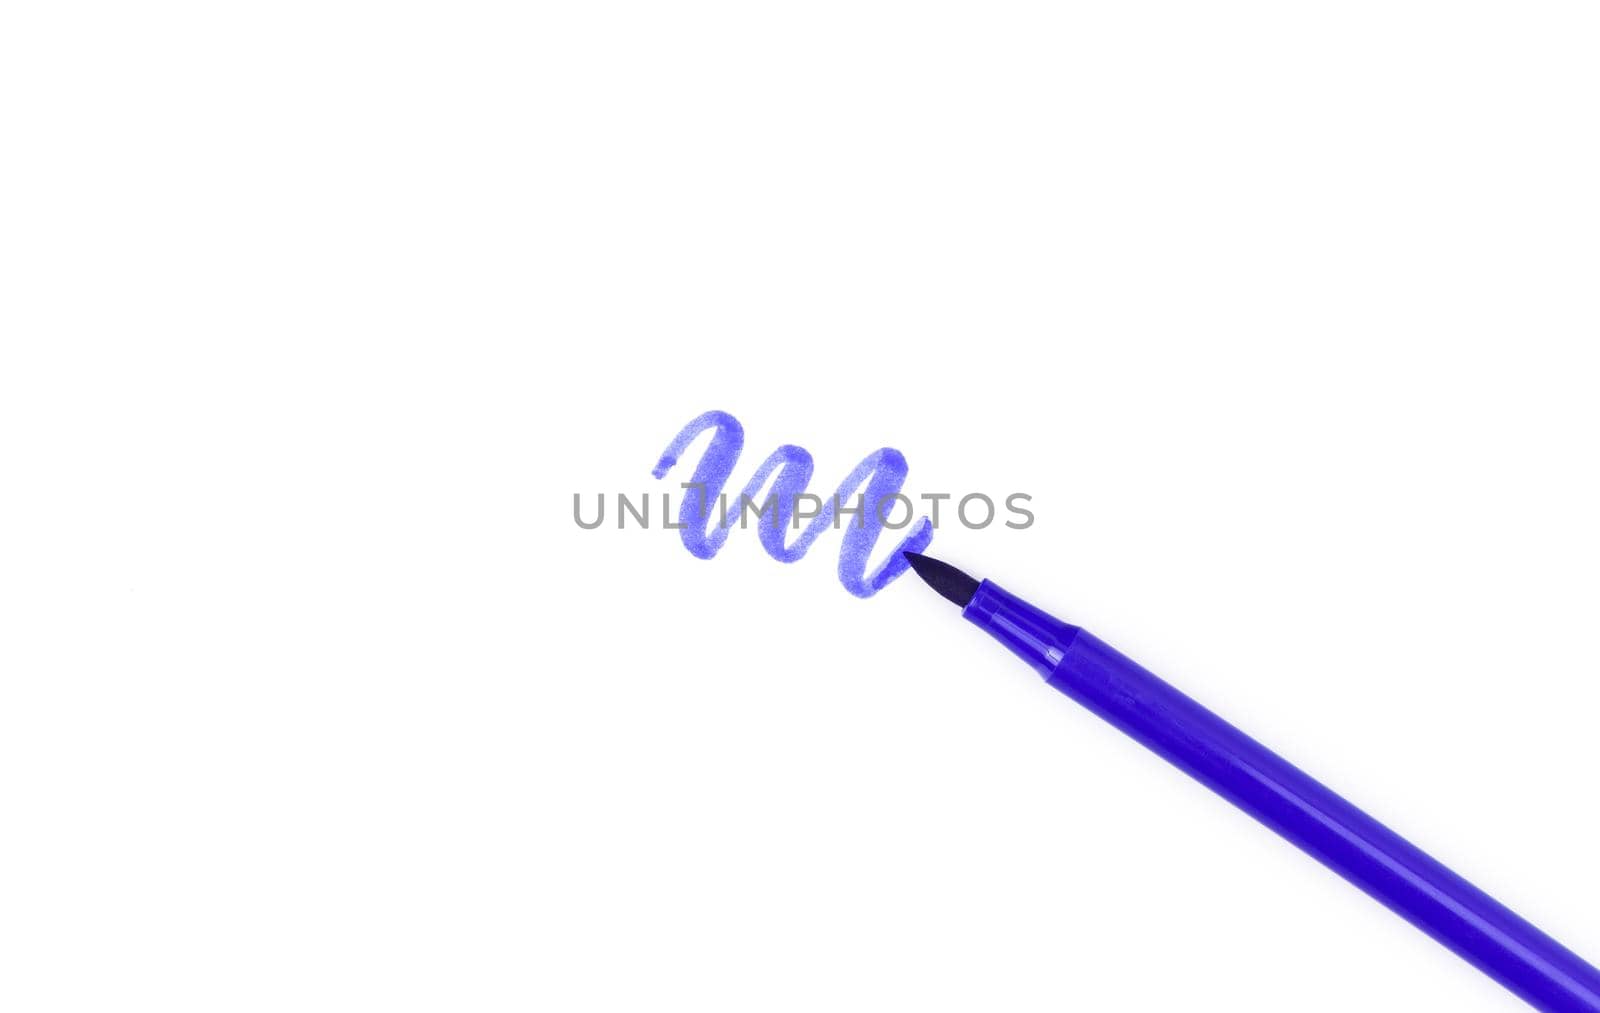 Purple pen marker isolated on white background.